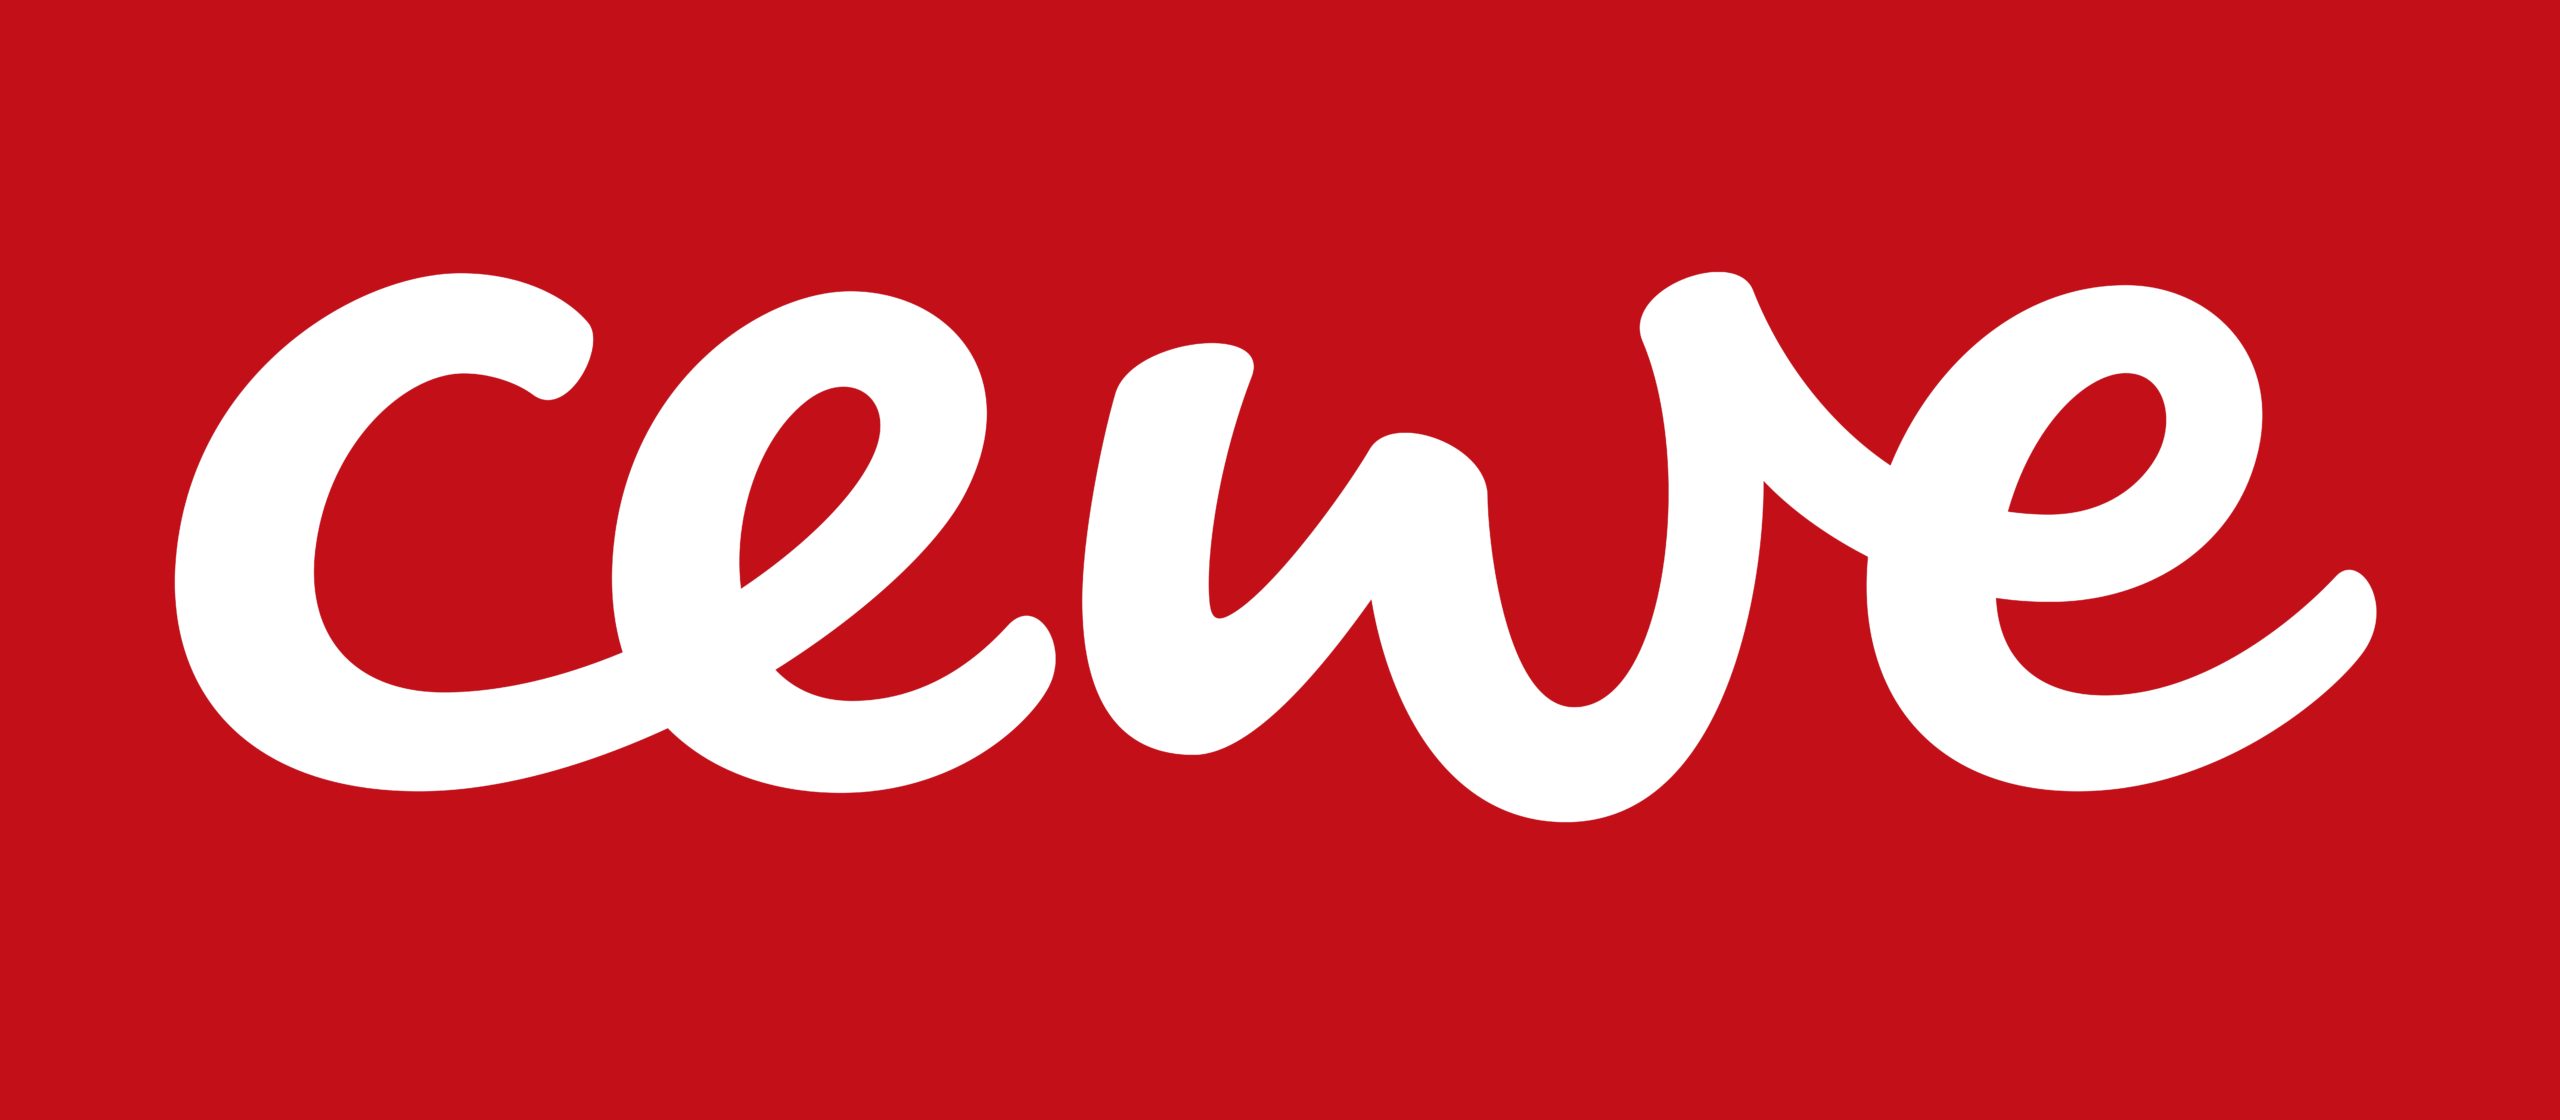 CEWE Logo 2018